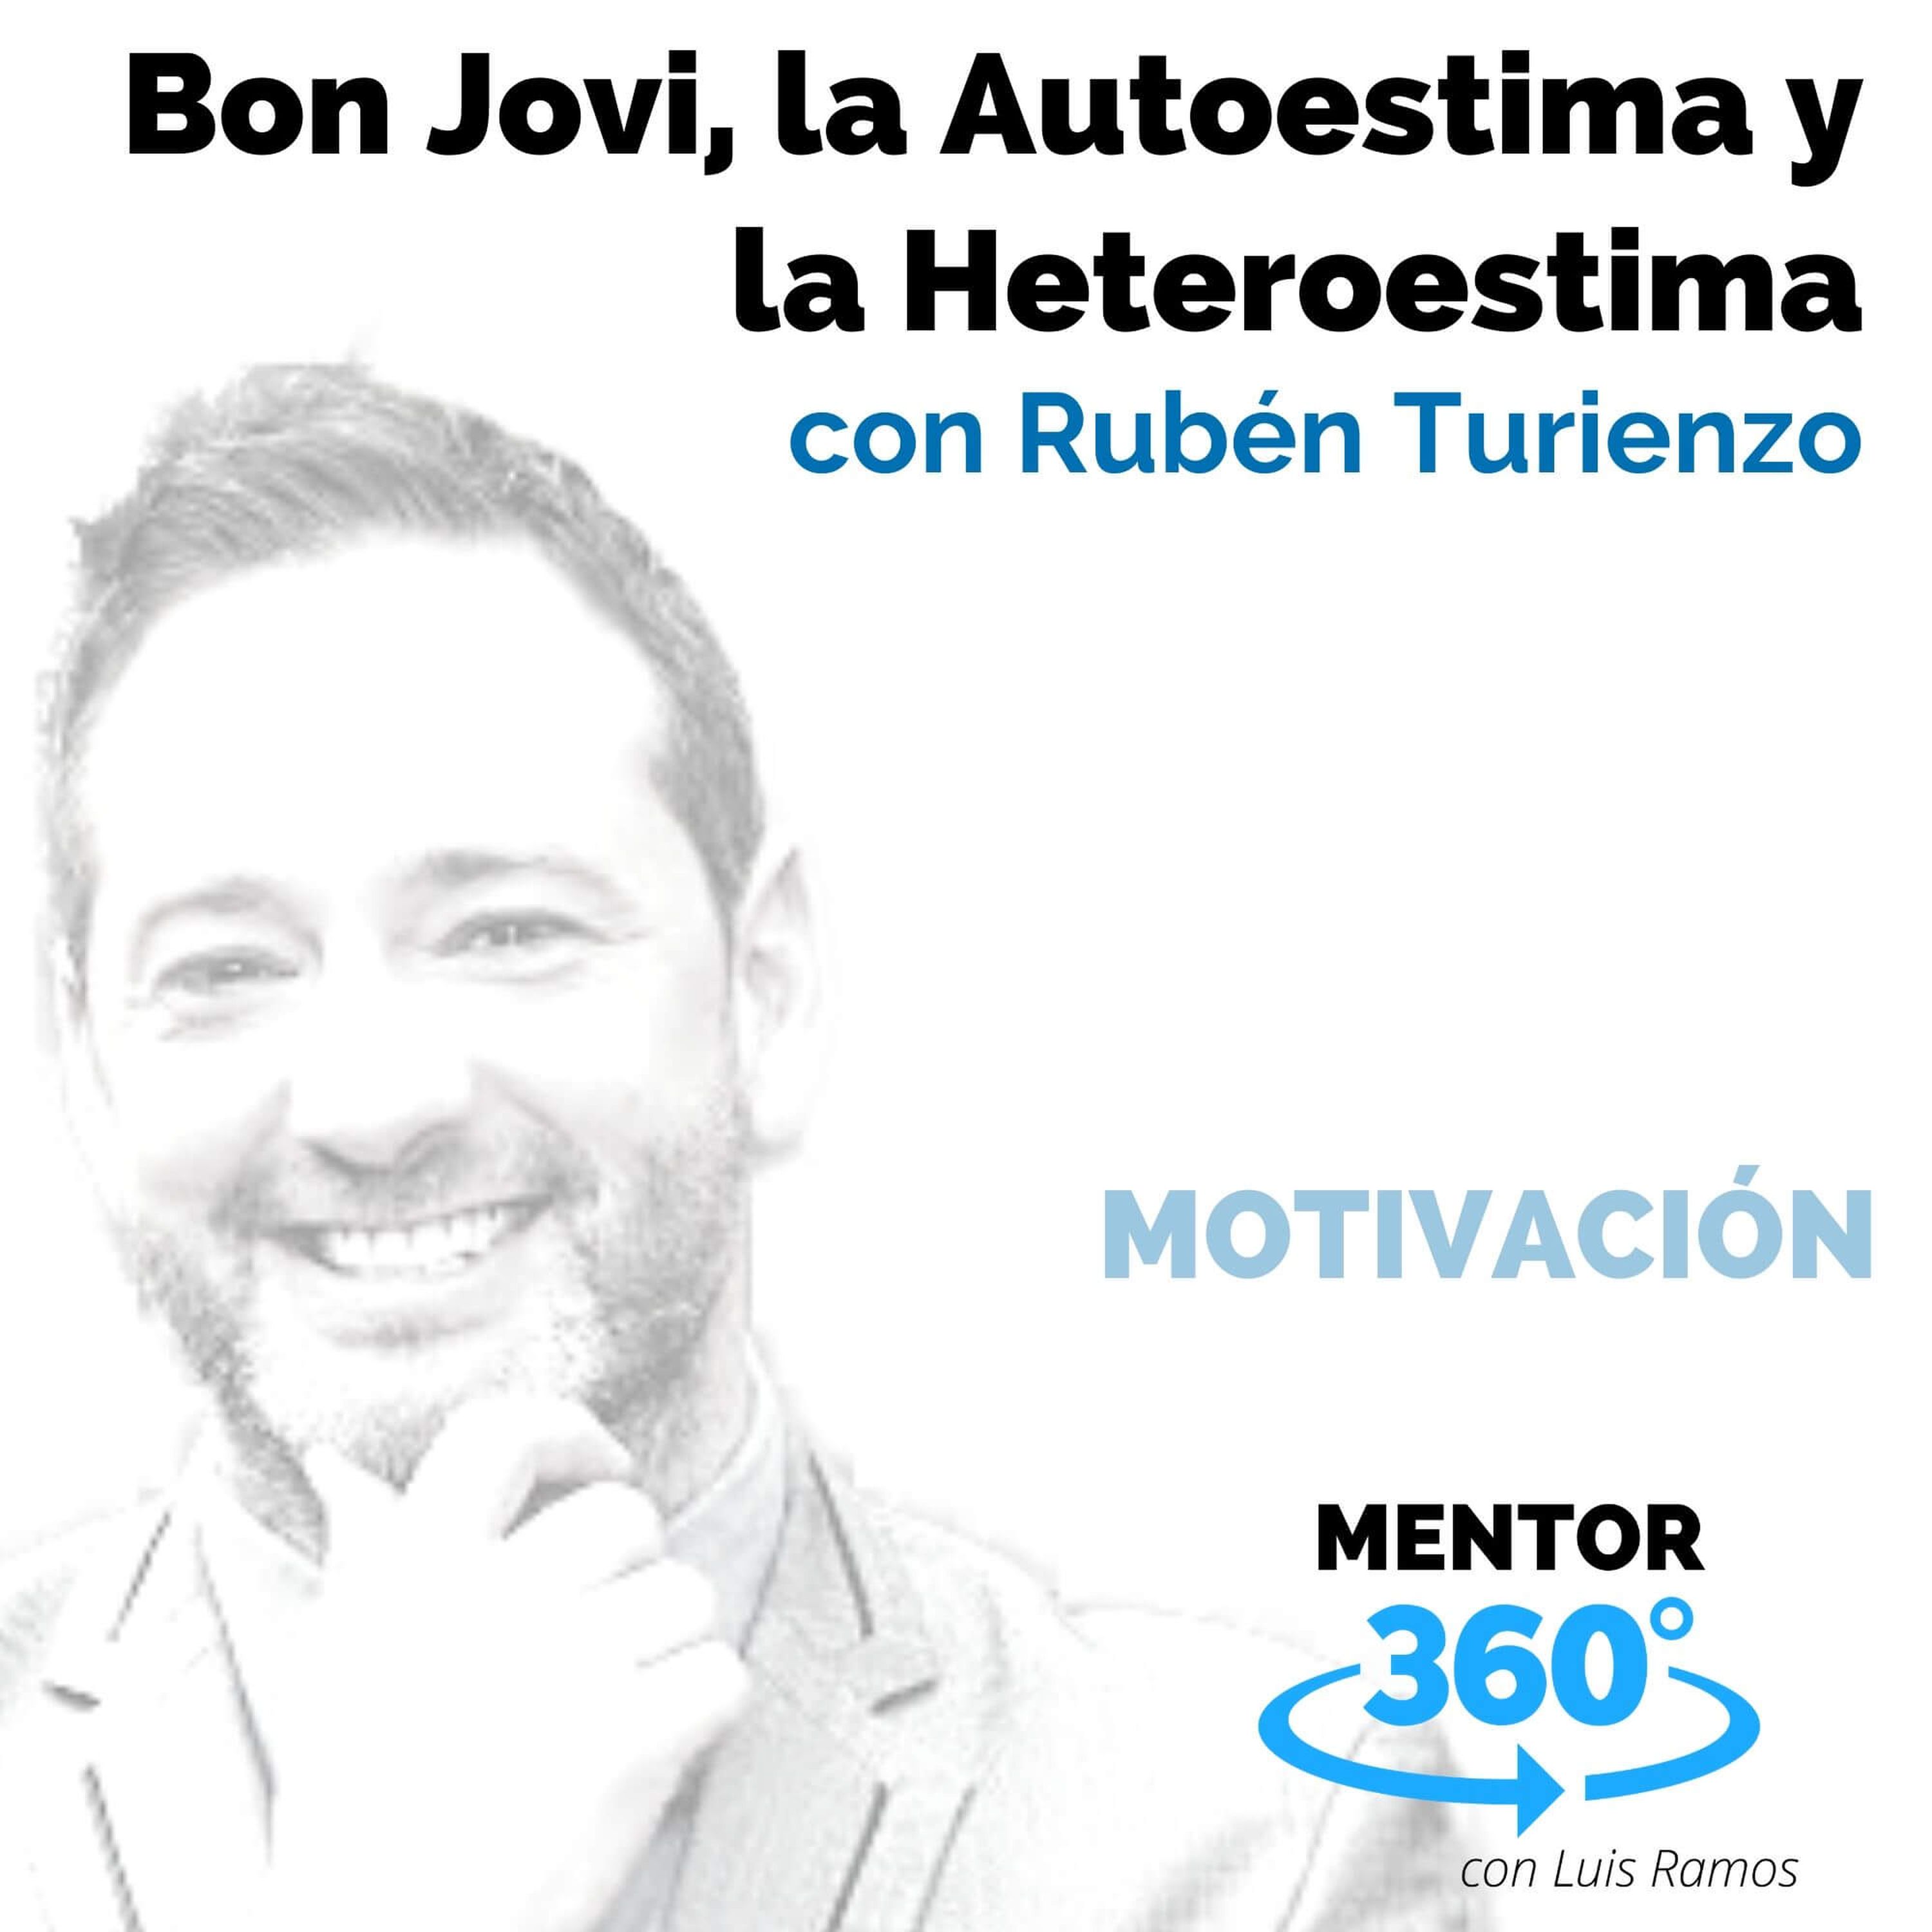 Bon Jovi, la Autoestima y la Heteroestima, con Rubén Turienzo - MENTOR360